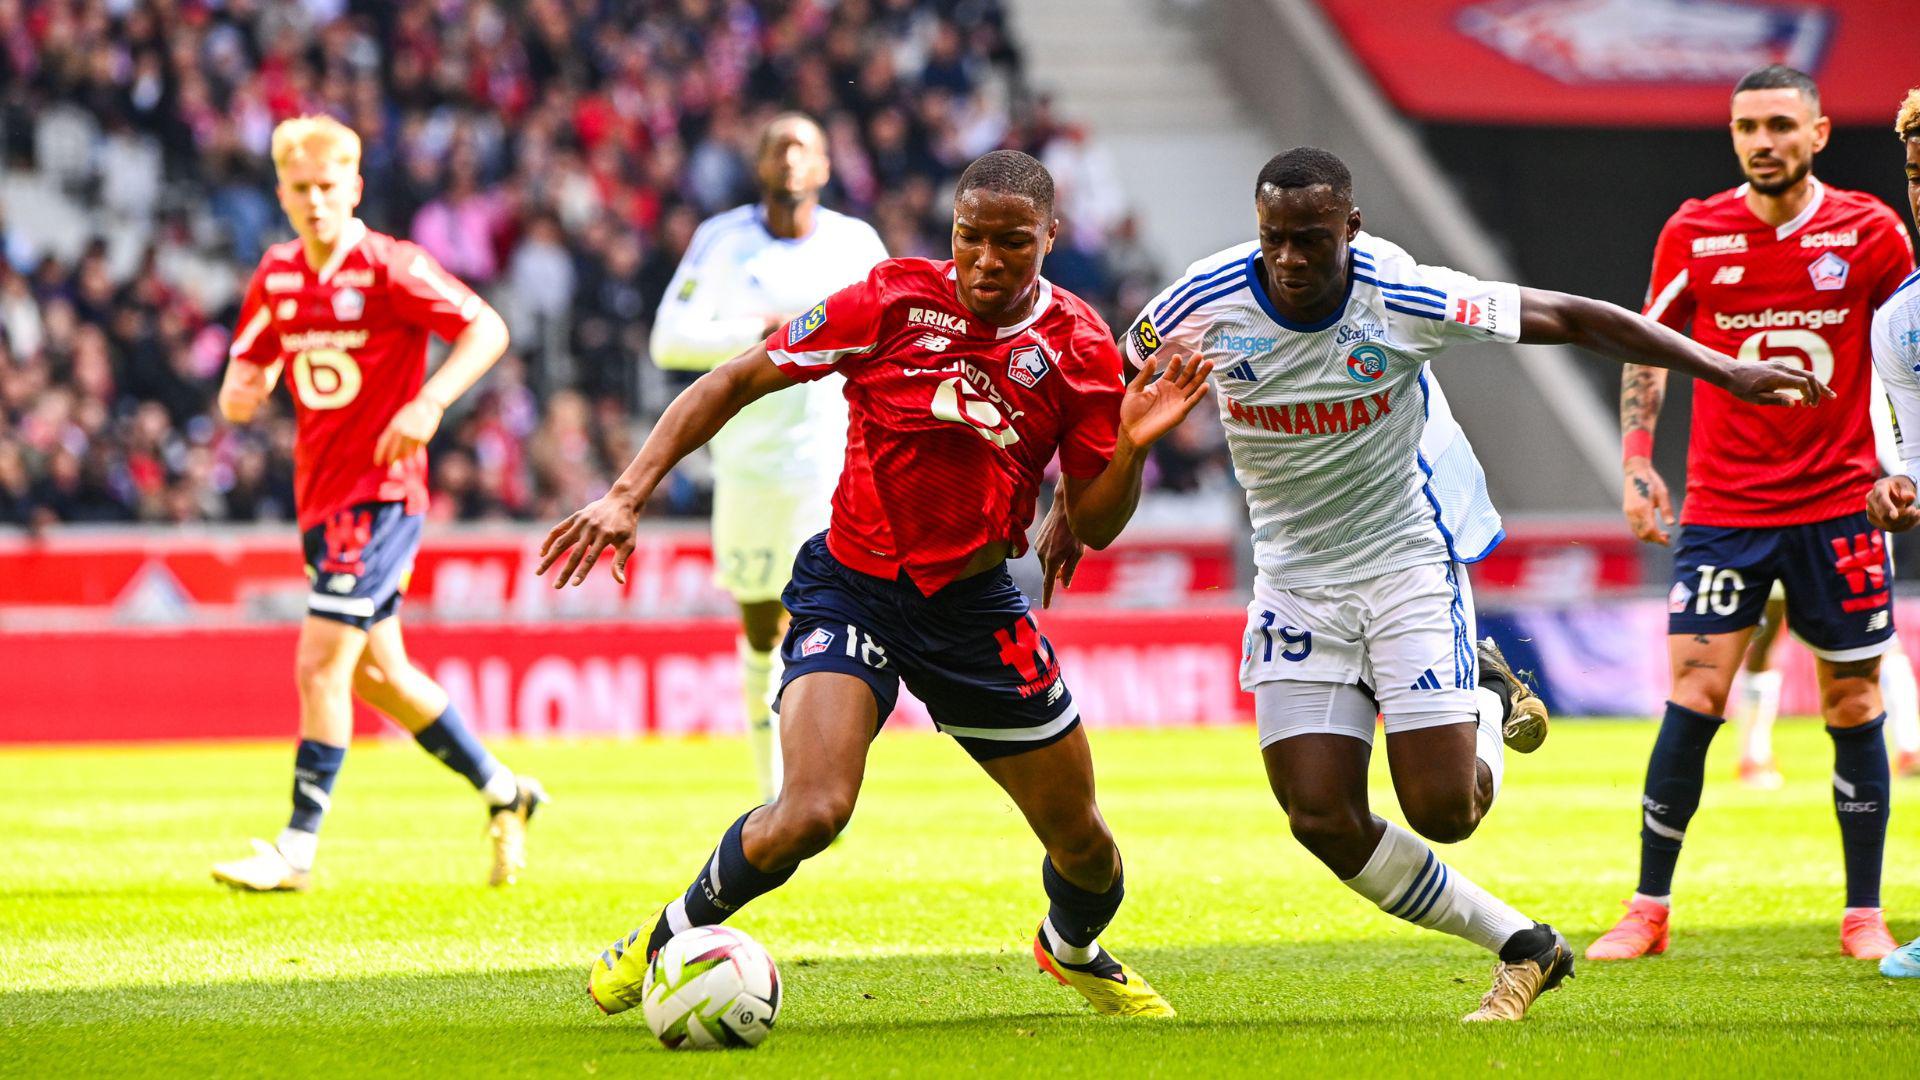 VIDEO | Ligue 1 Highlights: Lille vs Strasbourg